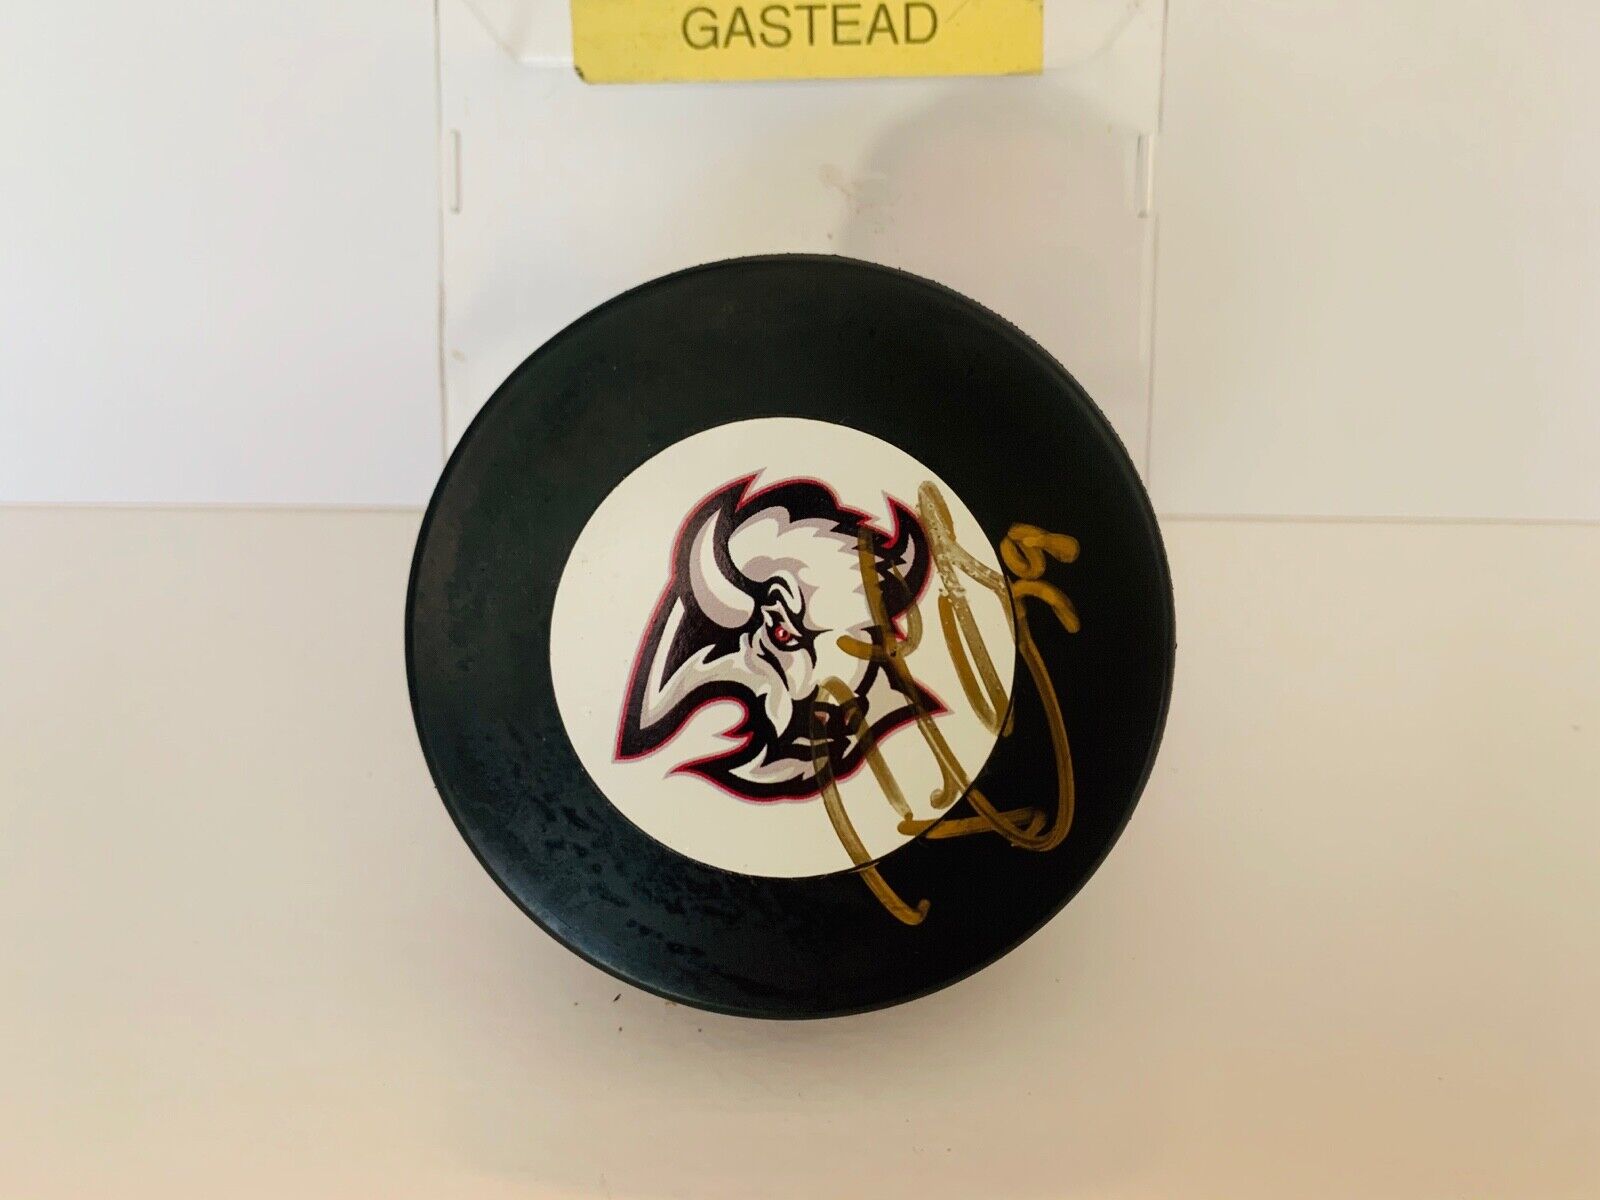 Paul Gaustead Autographed Signed IIHF Gufex Hockey Puck Buffalo Sabres Team Logo